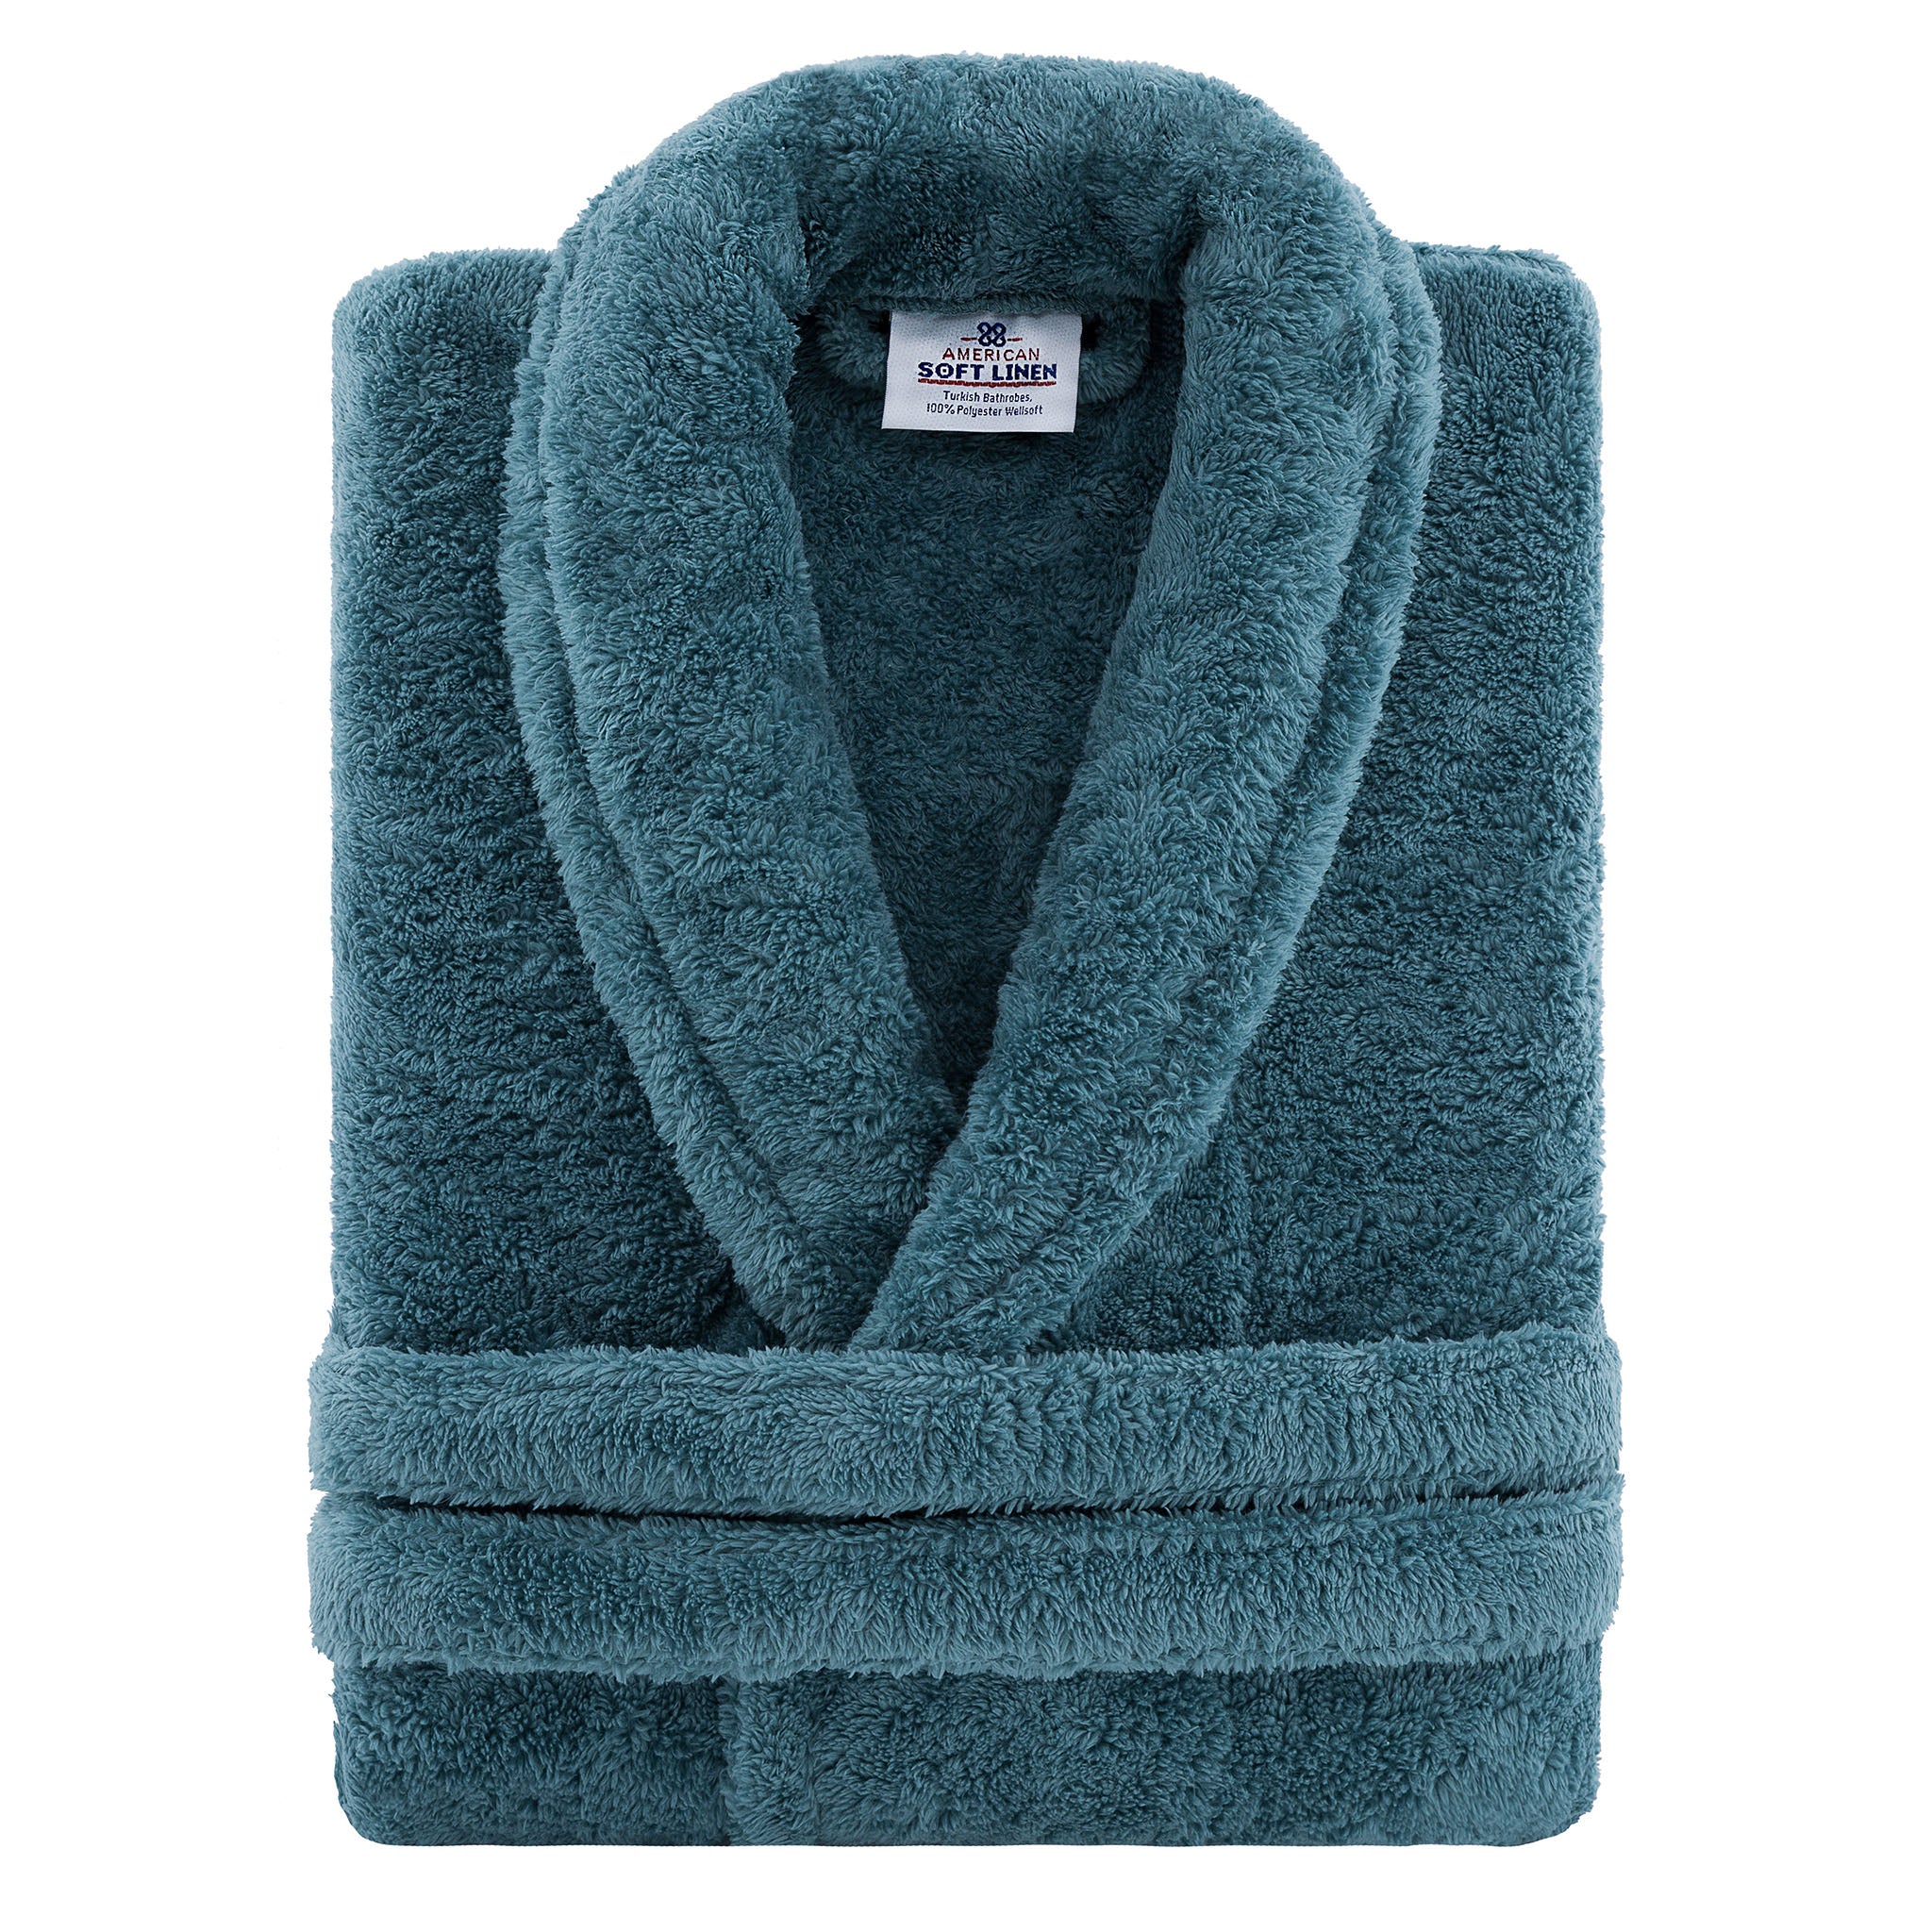 American Soft Linen Super Soft Absorbent and Fluffy Unisex Fleece Bathrobe -12 Set Case Pack -S-M-colonial-blue-3